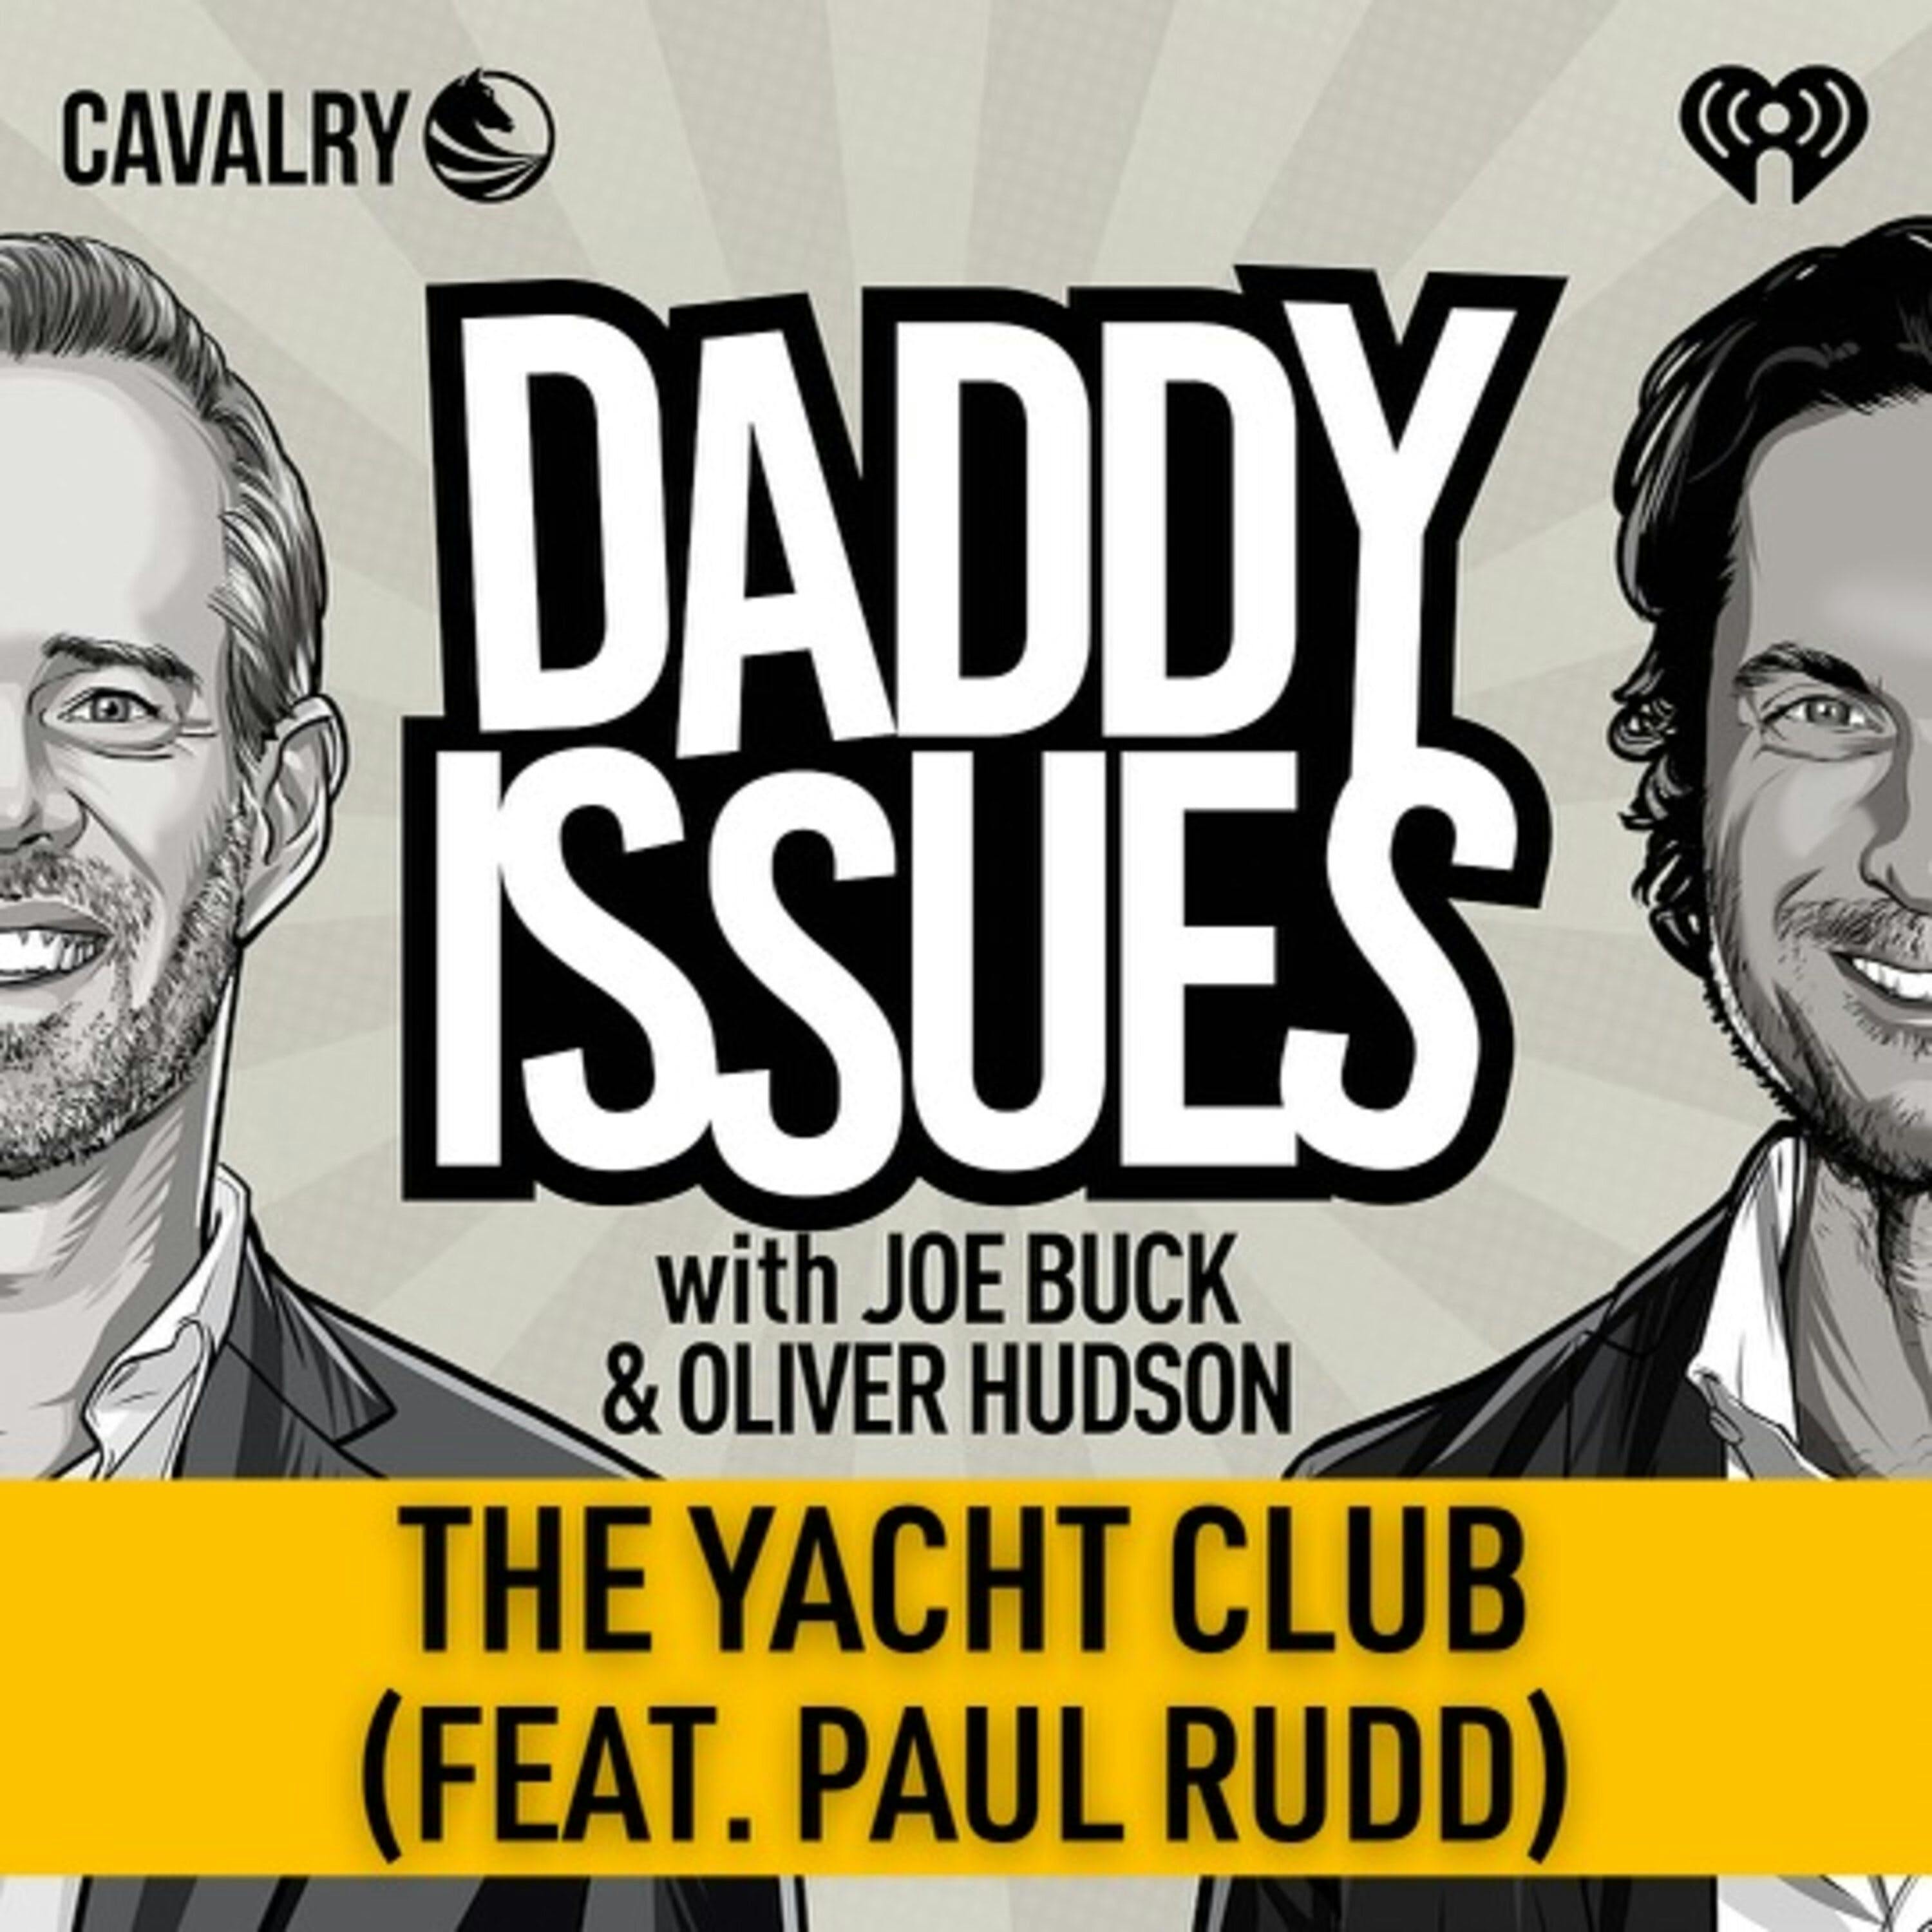 The Yacht Club (Feat. Paul Rudd)